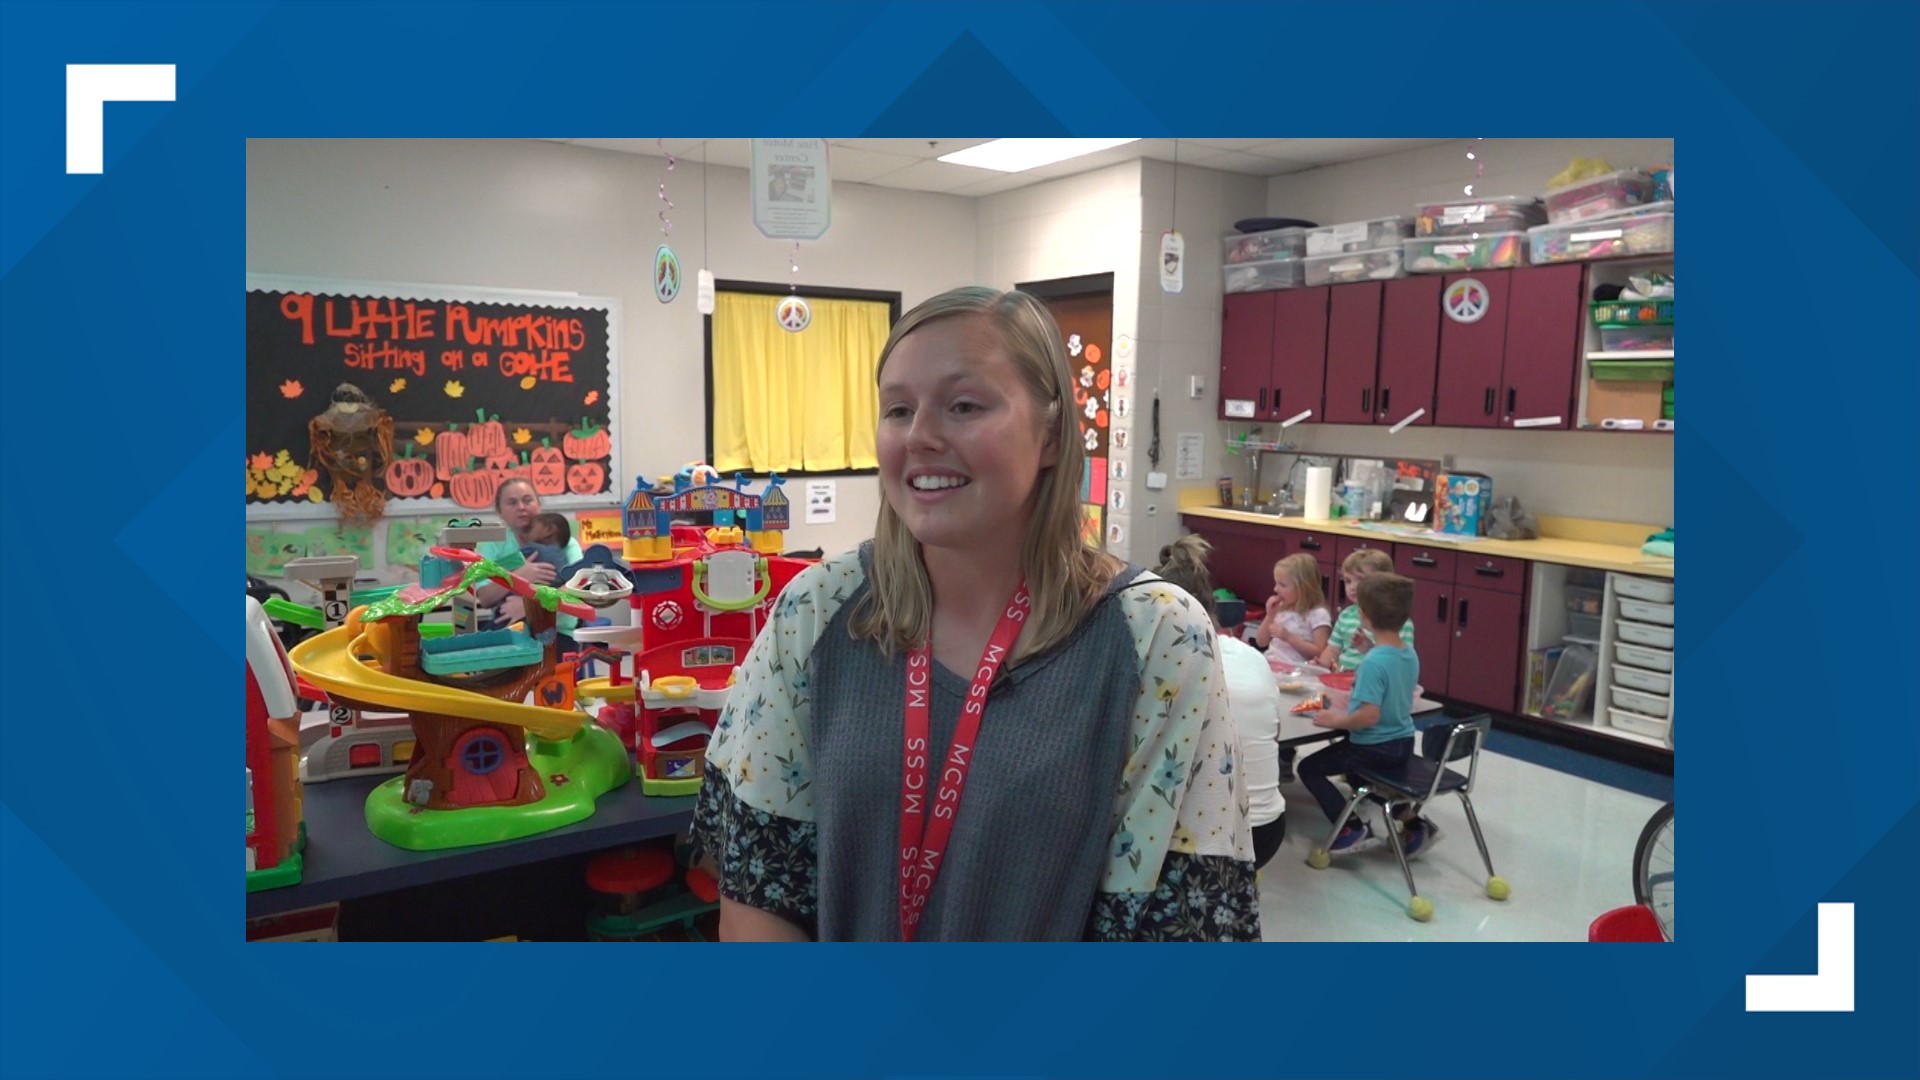 Caroline Chisler has been teaching as a Developmental Preschool Teacher at Endeavor Elementary School for nearly three years.